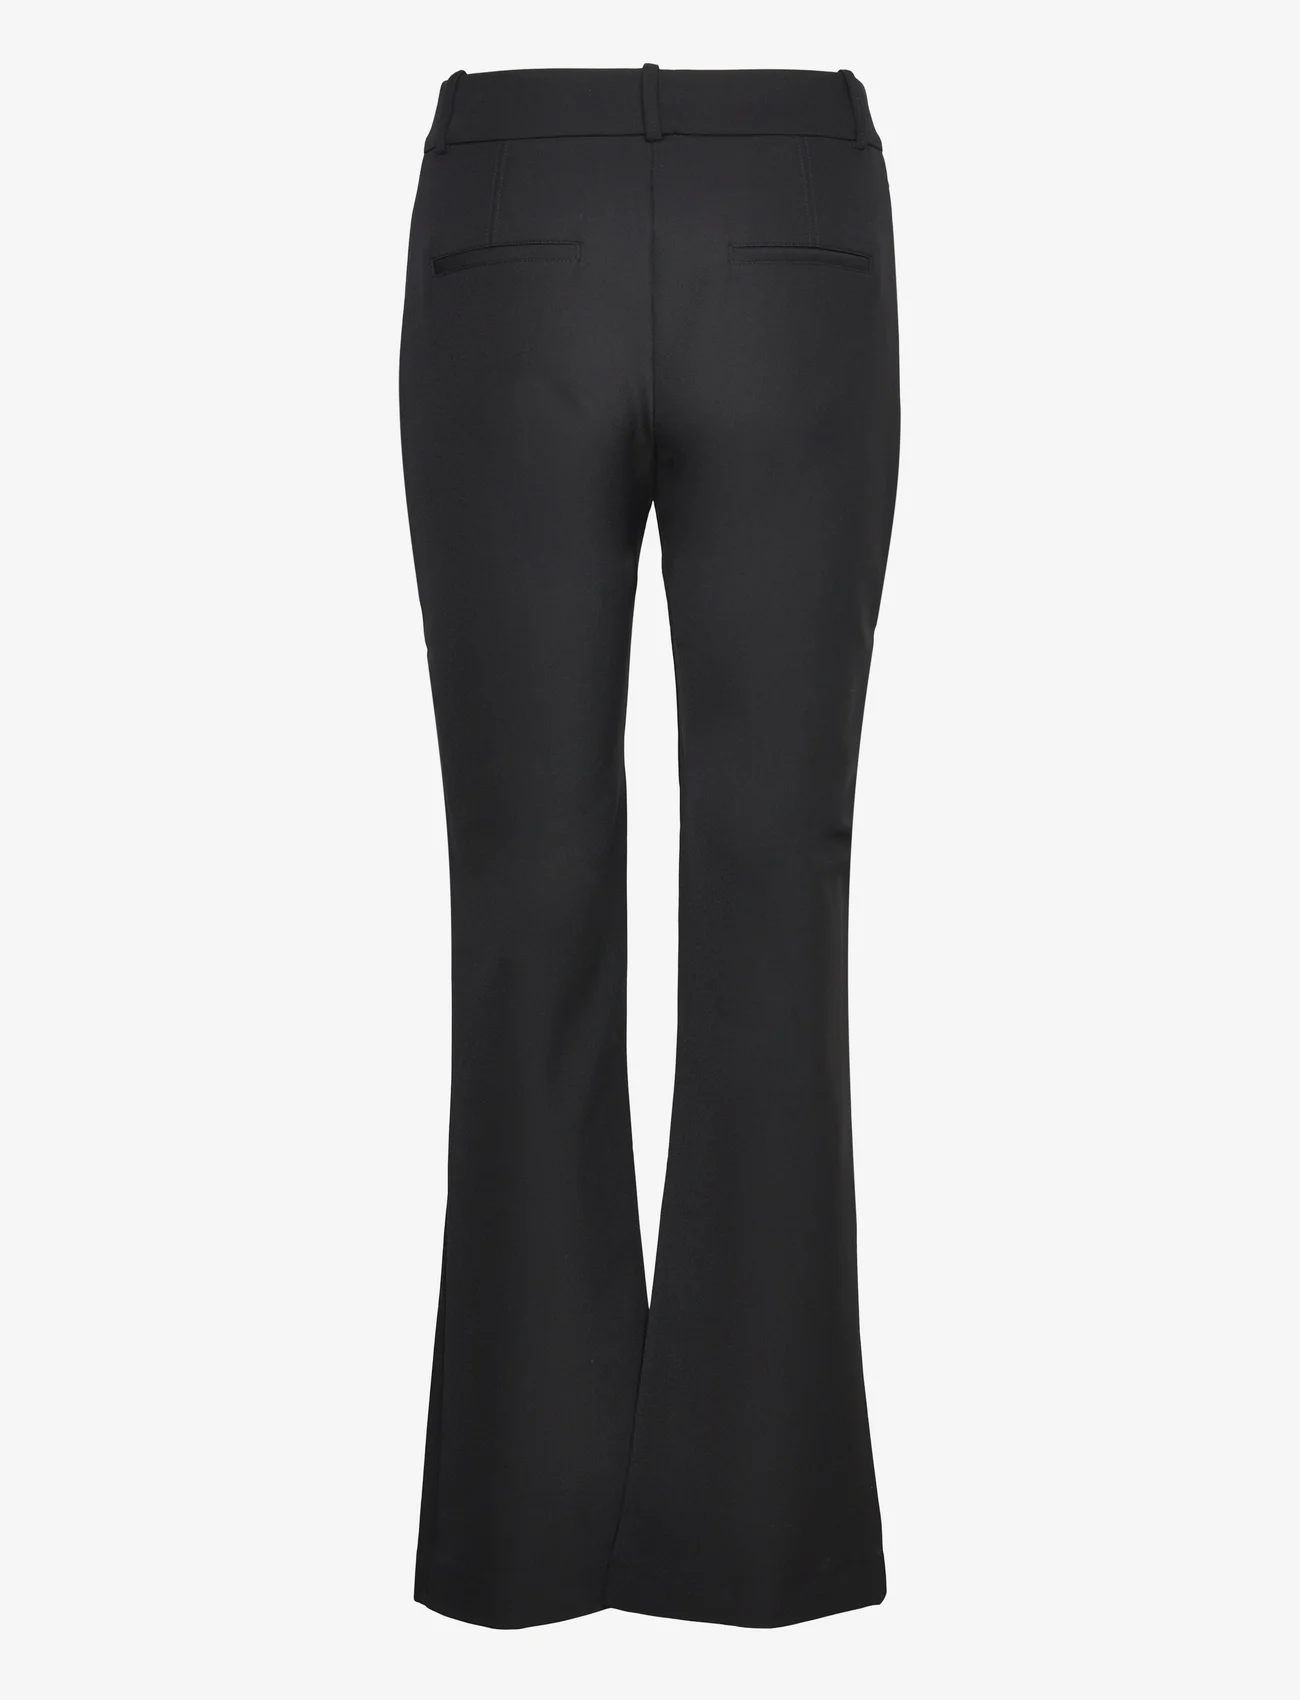 Samsøe Samsøe - Sarih trousers 14212 - puvunhousut - black - 1